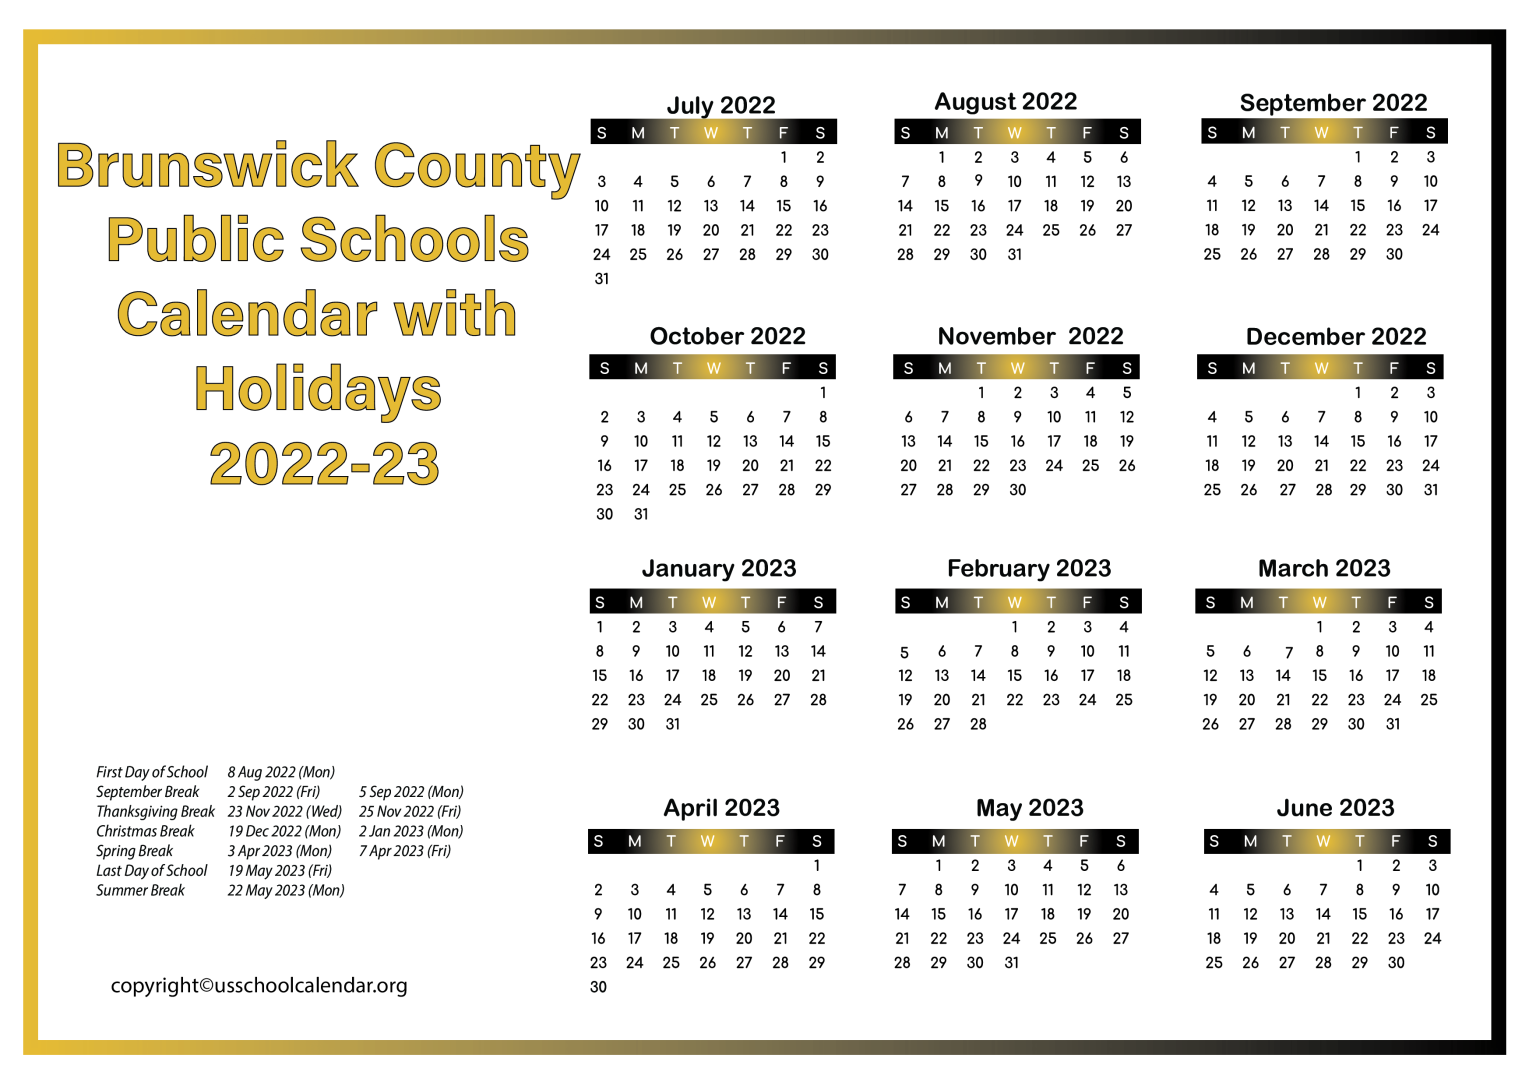 Brunswick County Public Schools Calendar with Holidays 202223